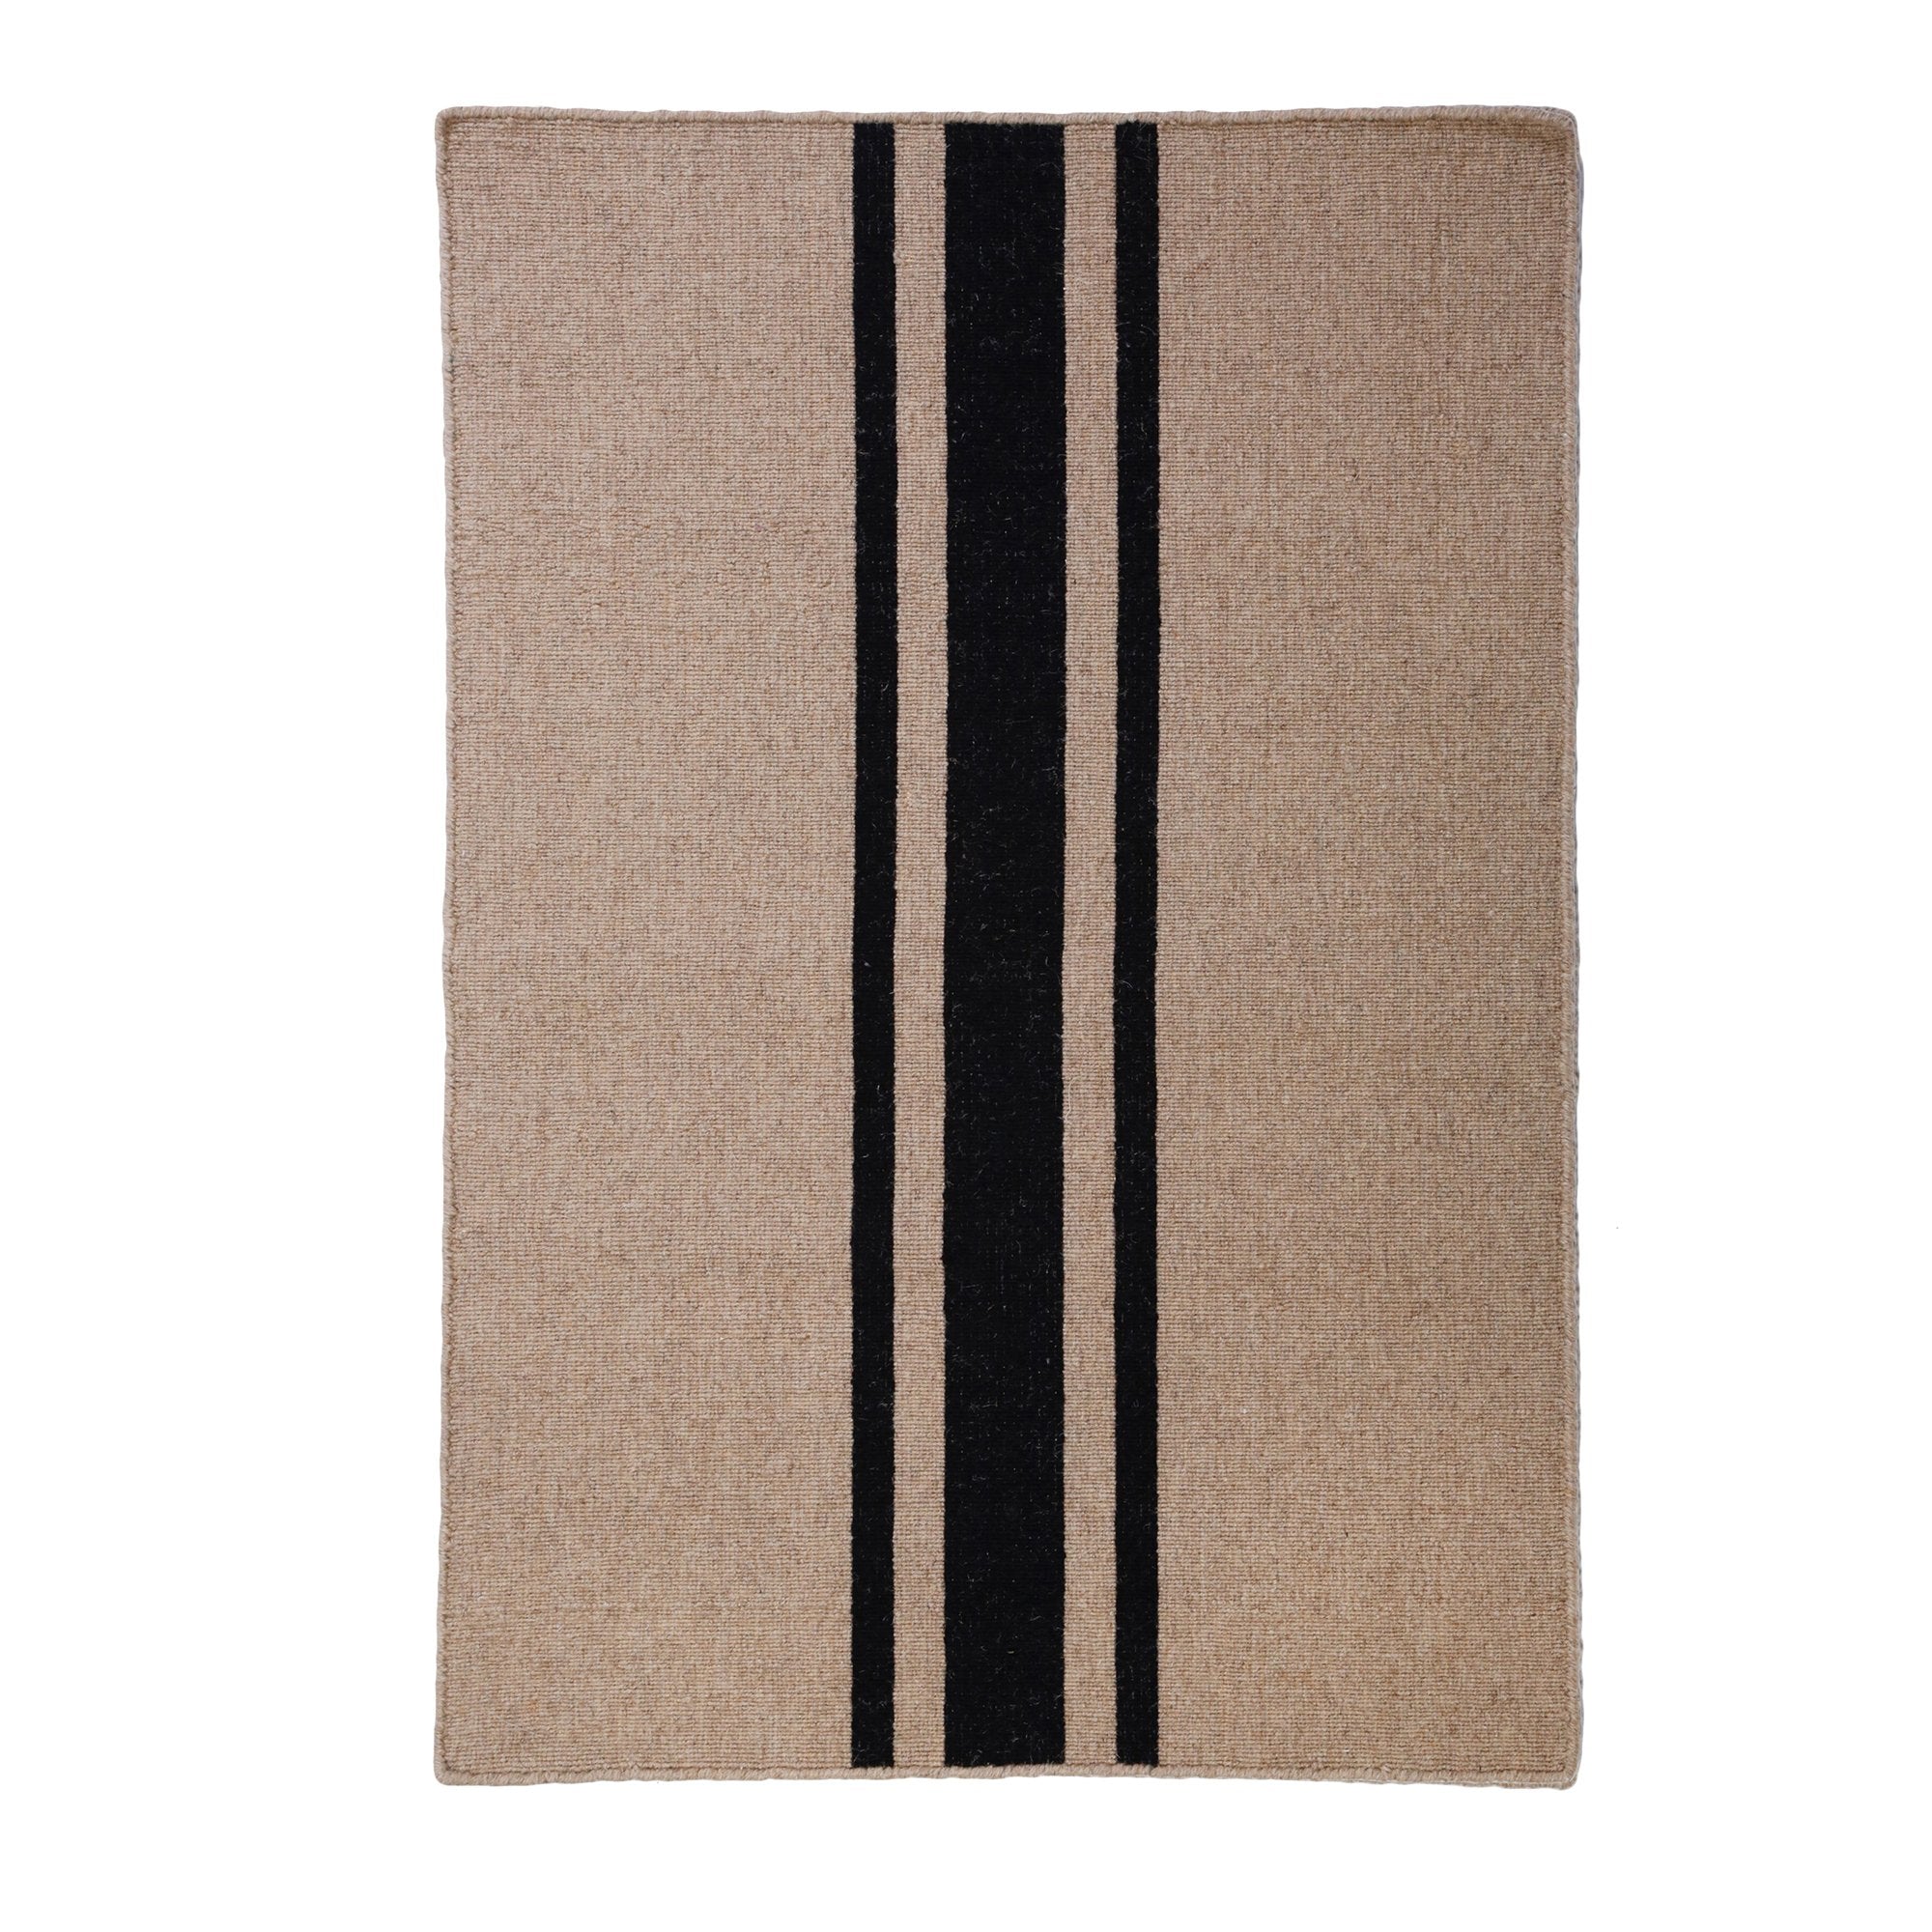 Handwoven Wool/Jute Rug- Natural with Black Stripe